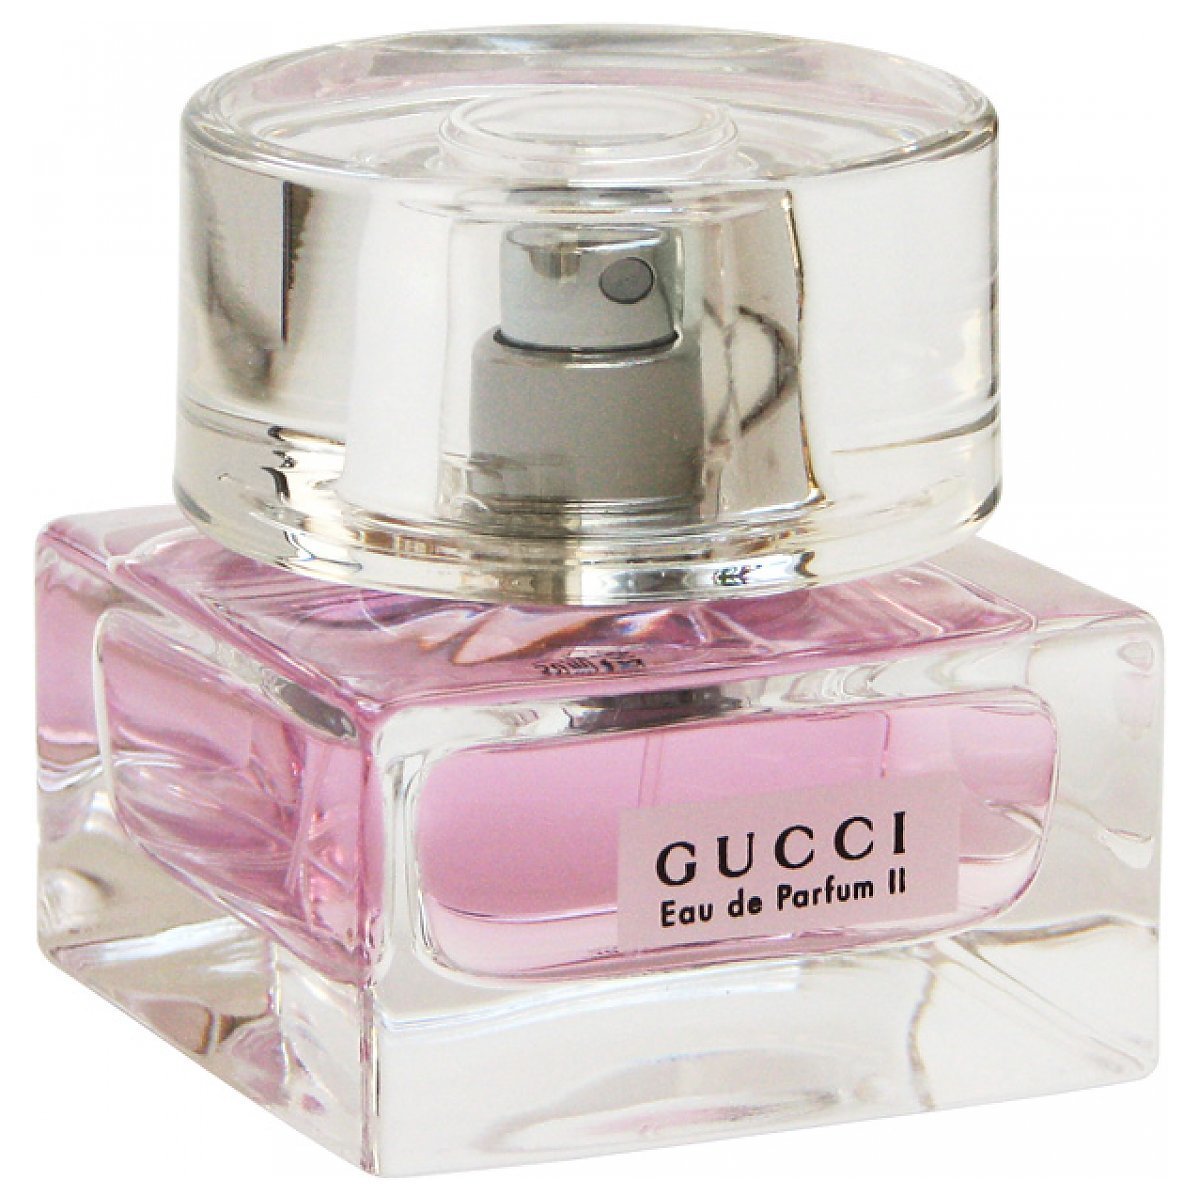 Gucci Eau de Parfum II Woda perfumowana spray 50ml - Perfumeria Dolce.pl